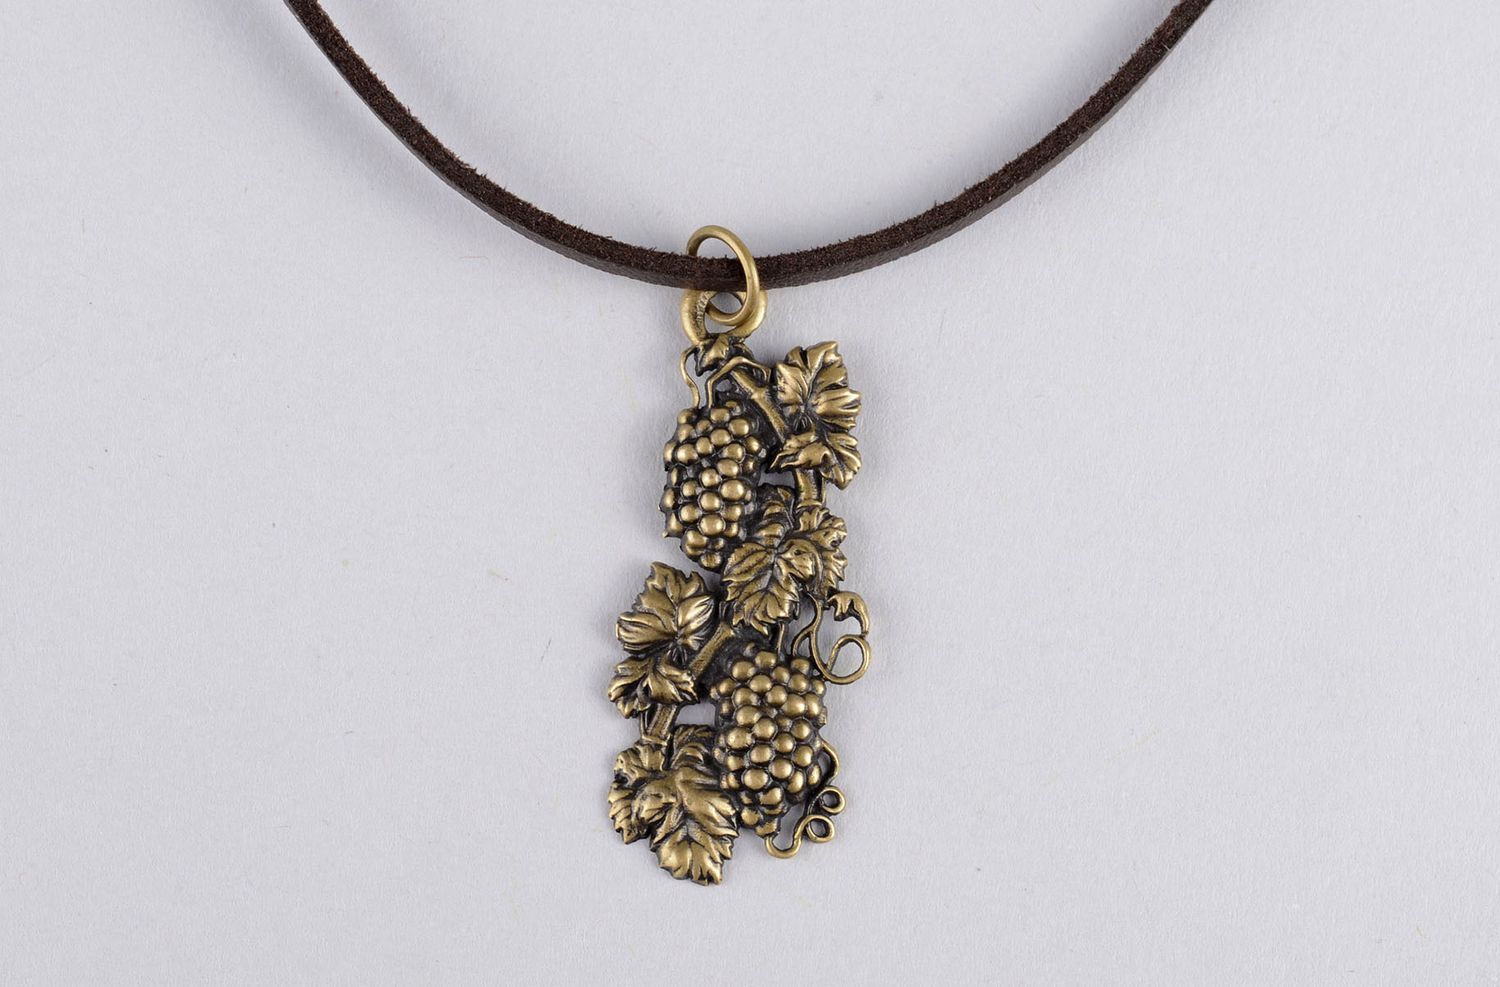 Long necklace handmade pendant necklace bronze jewelry designer accessories photo 5